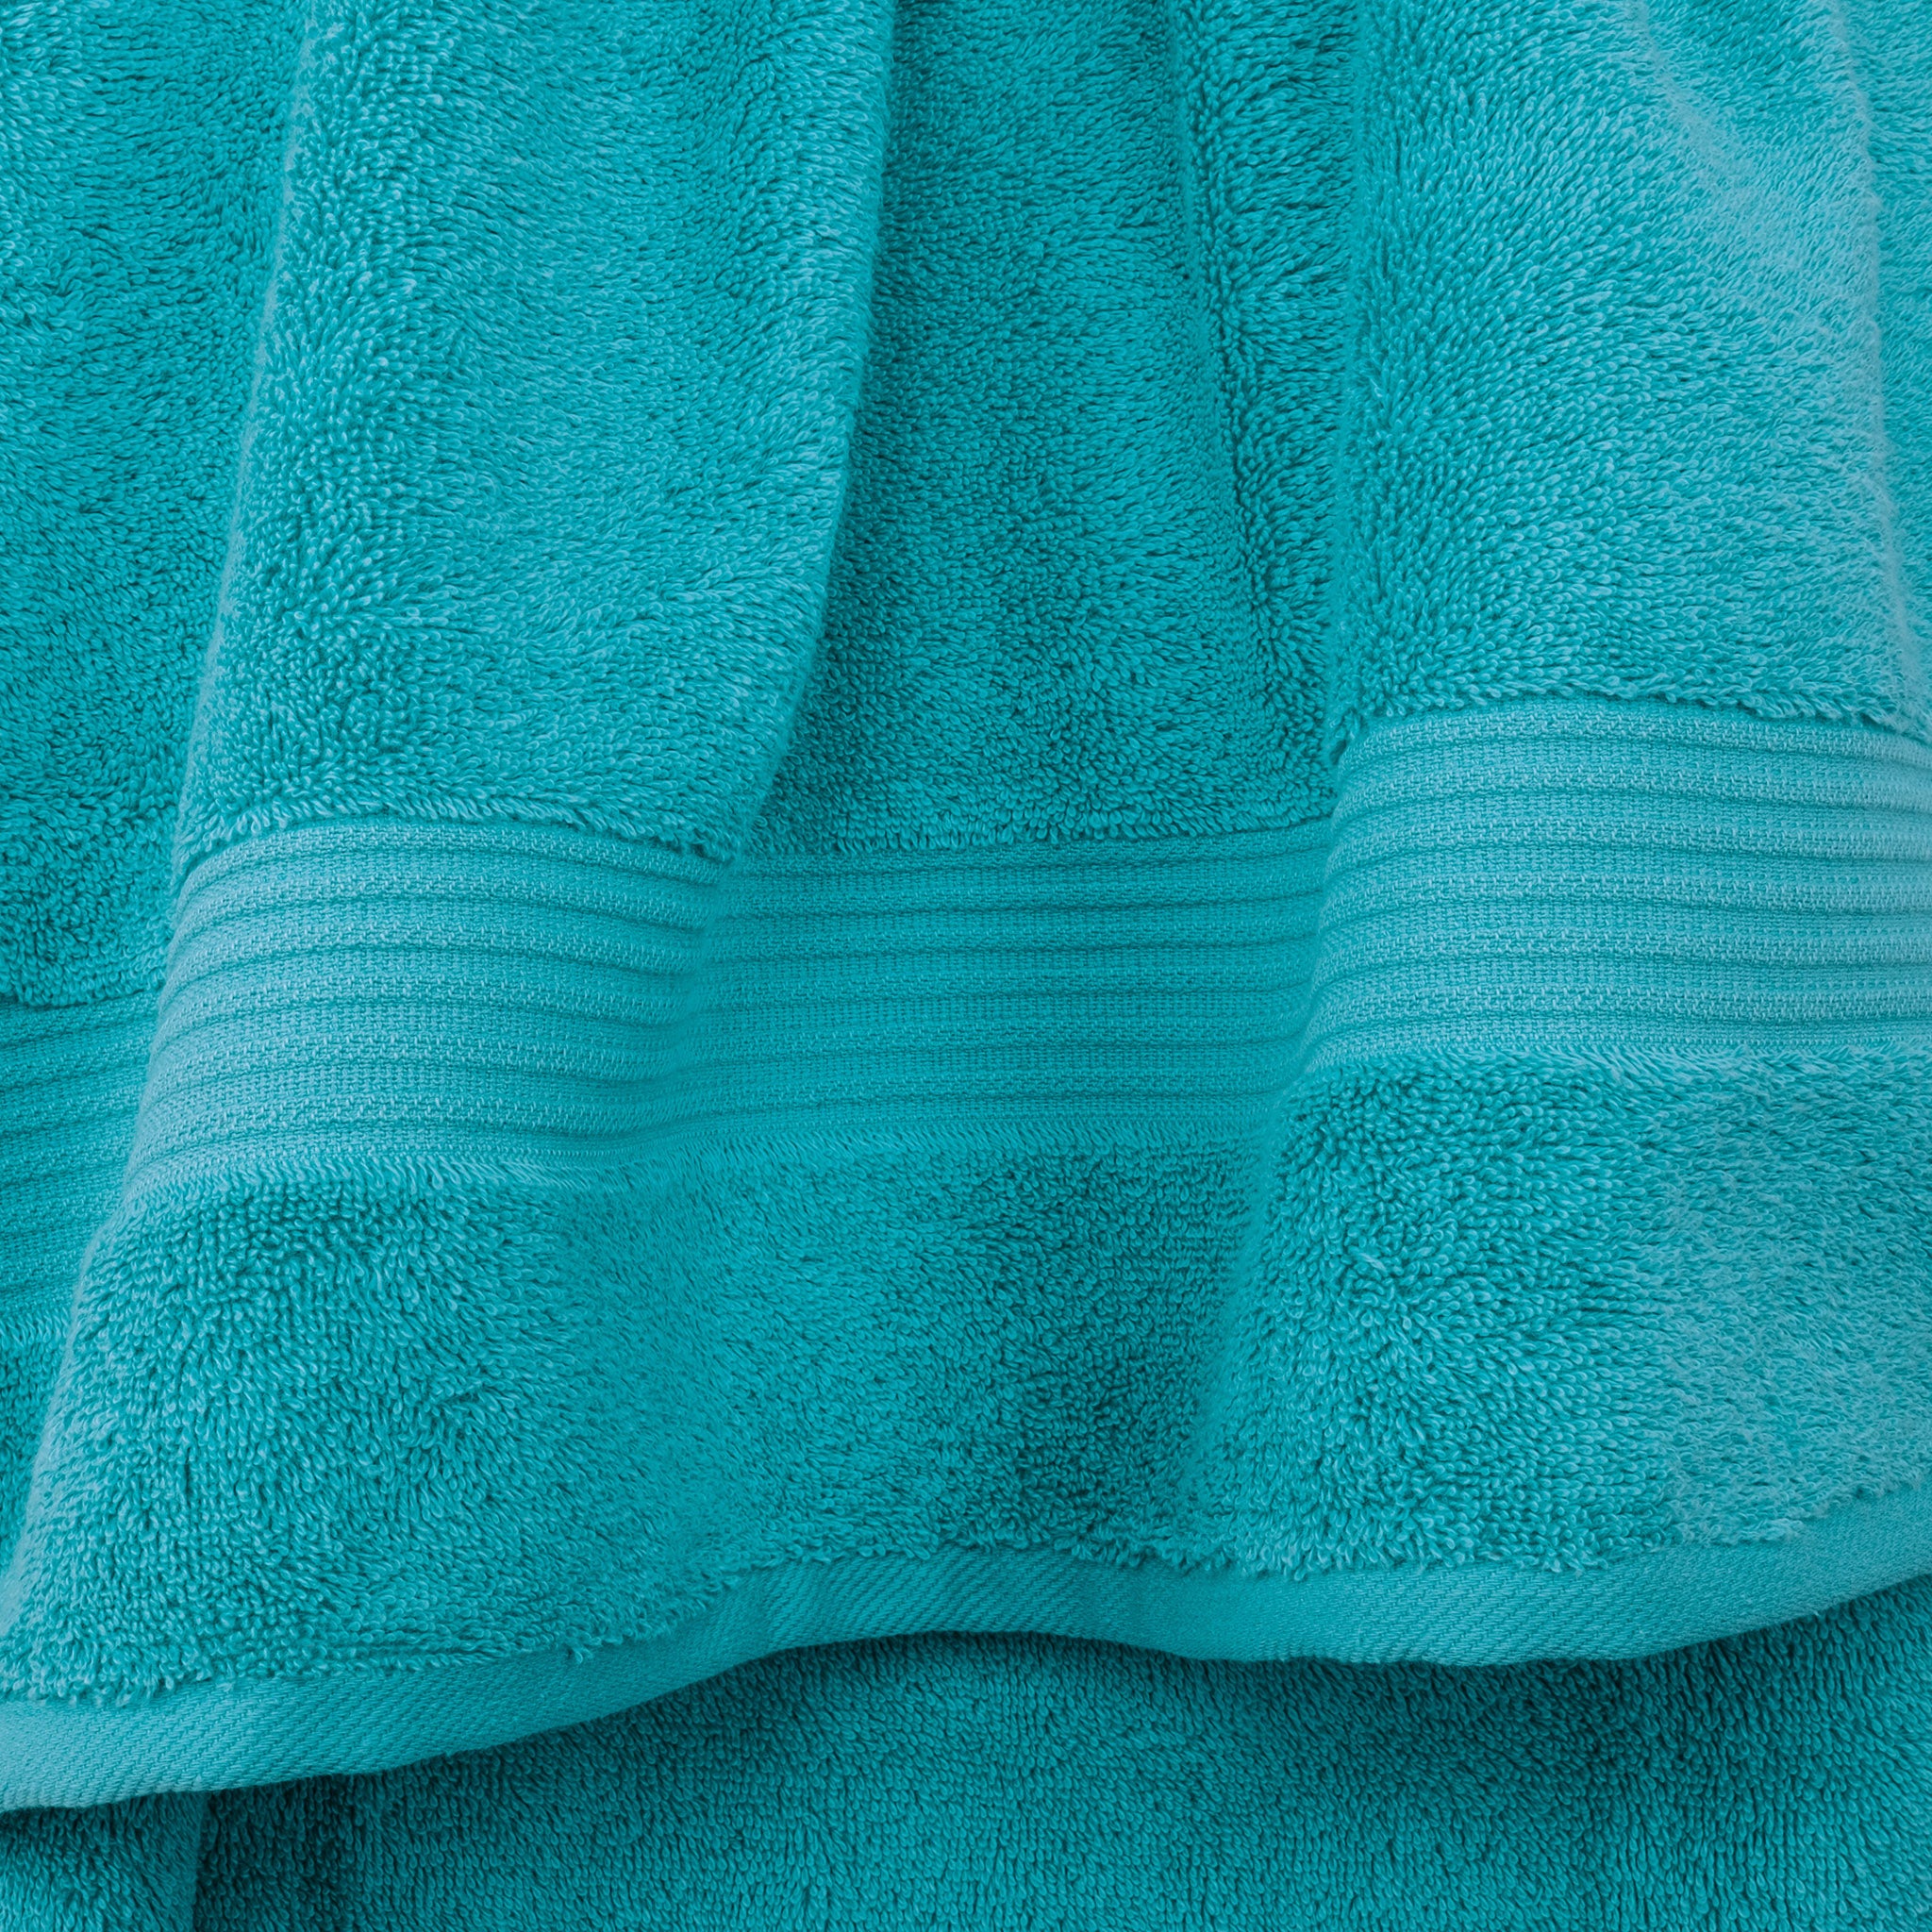 American Soft Linen Bekos 100% Cotton Turkish Towels, 4 Piece Hand Towel Set -aqua-blue-03